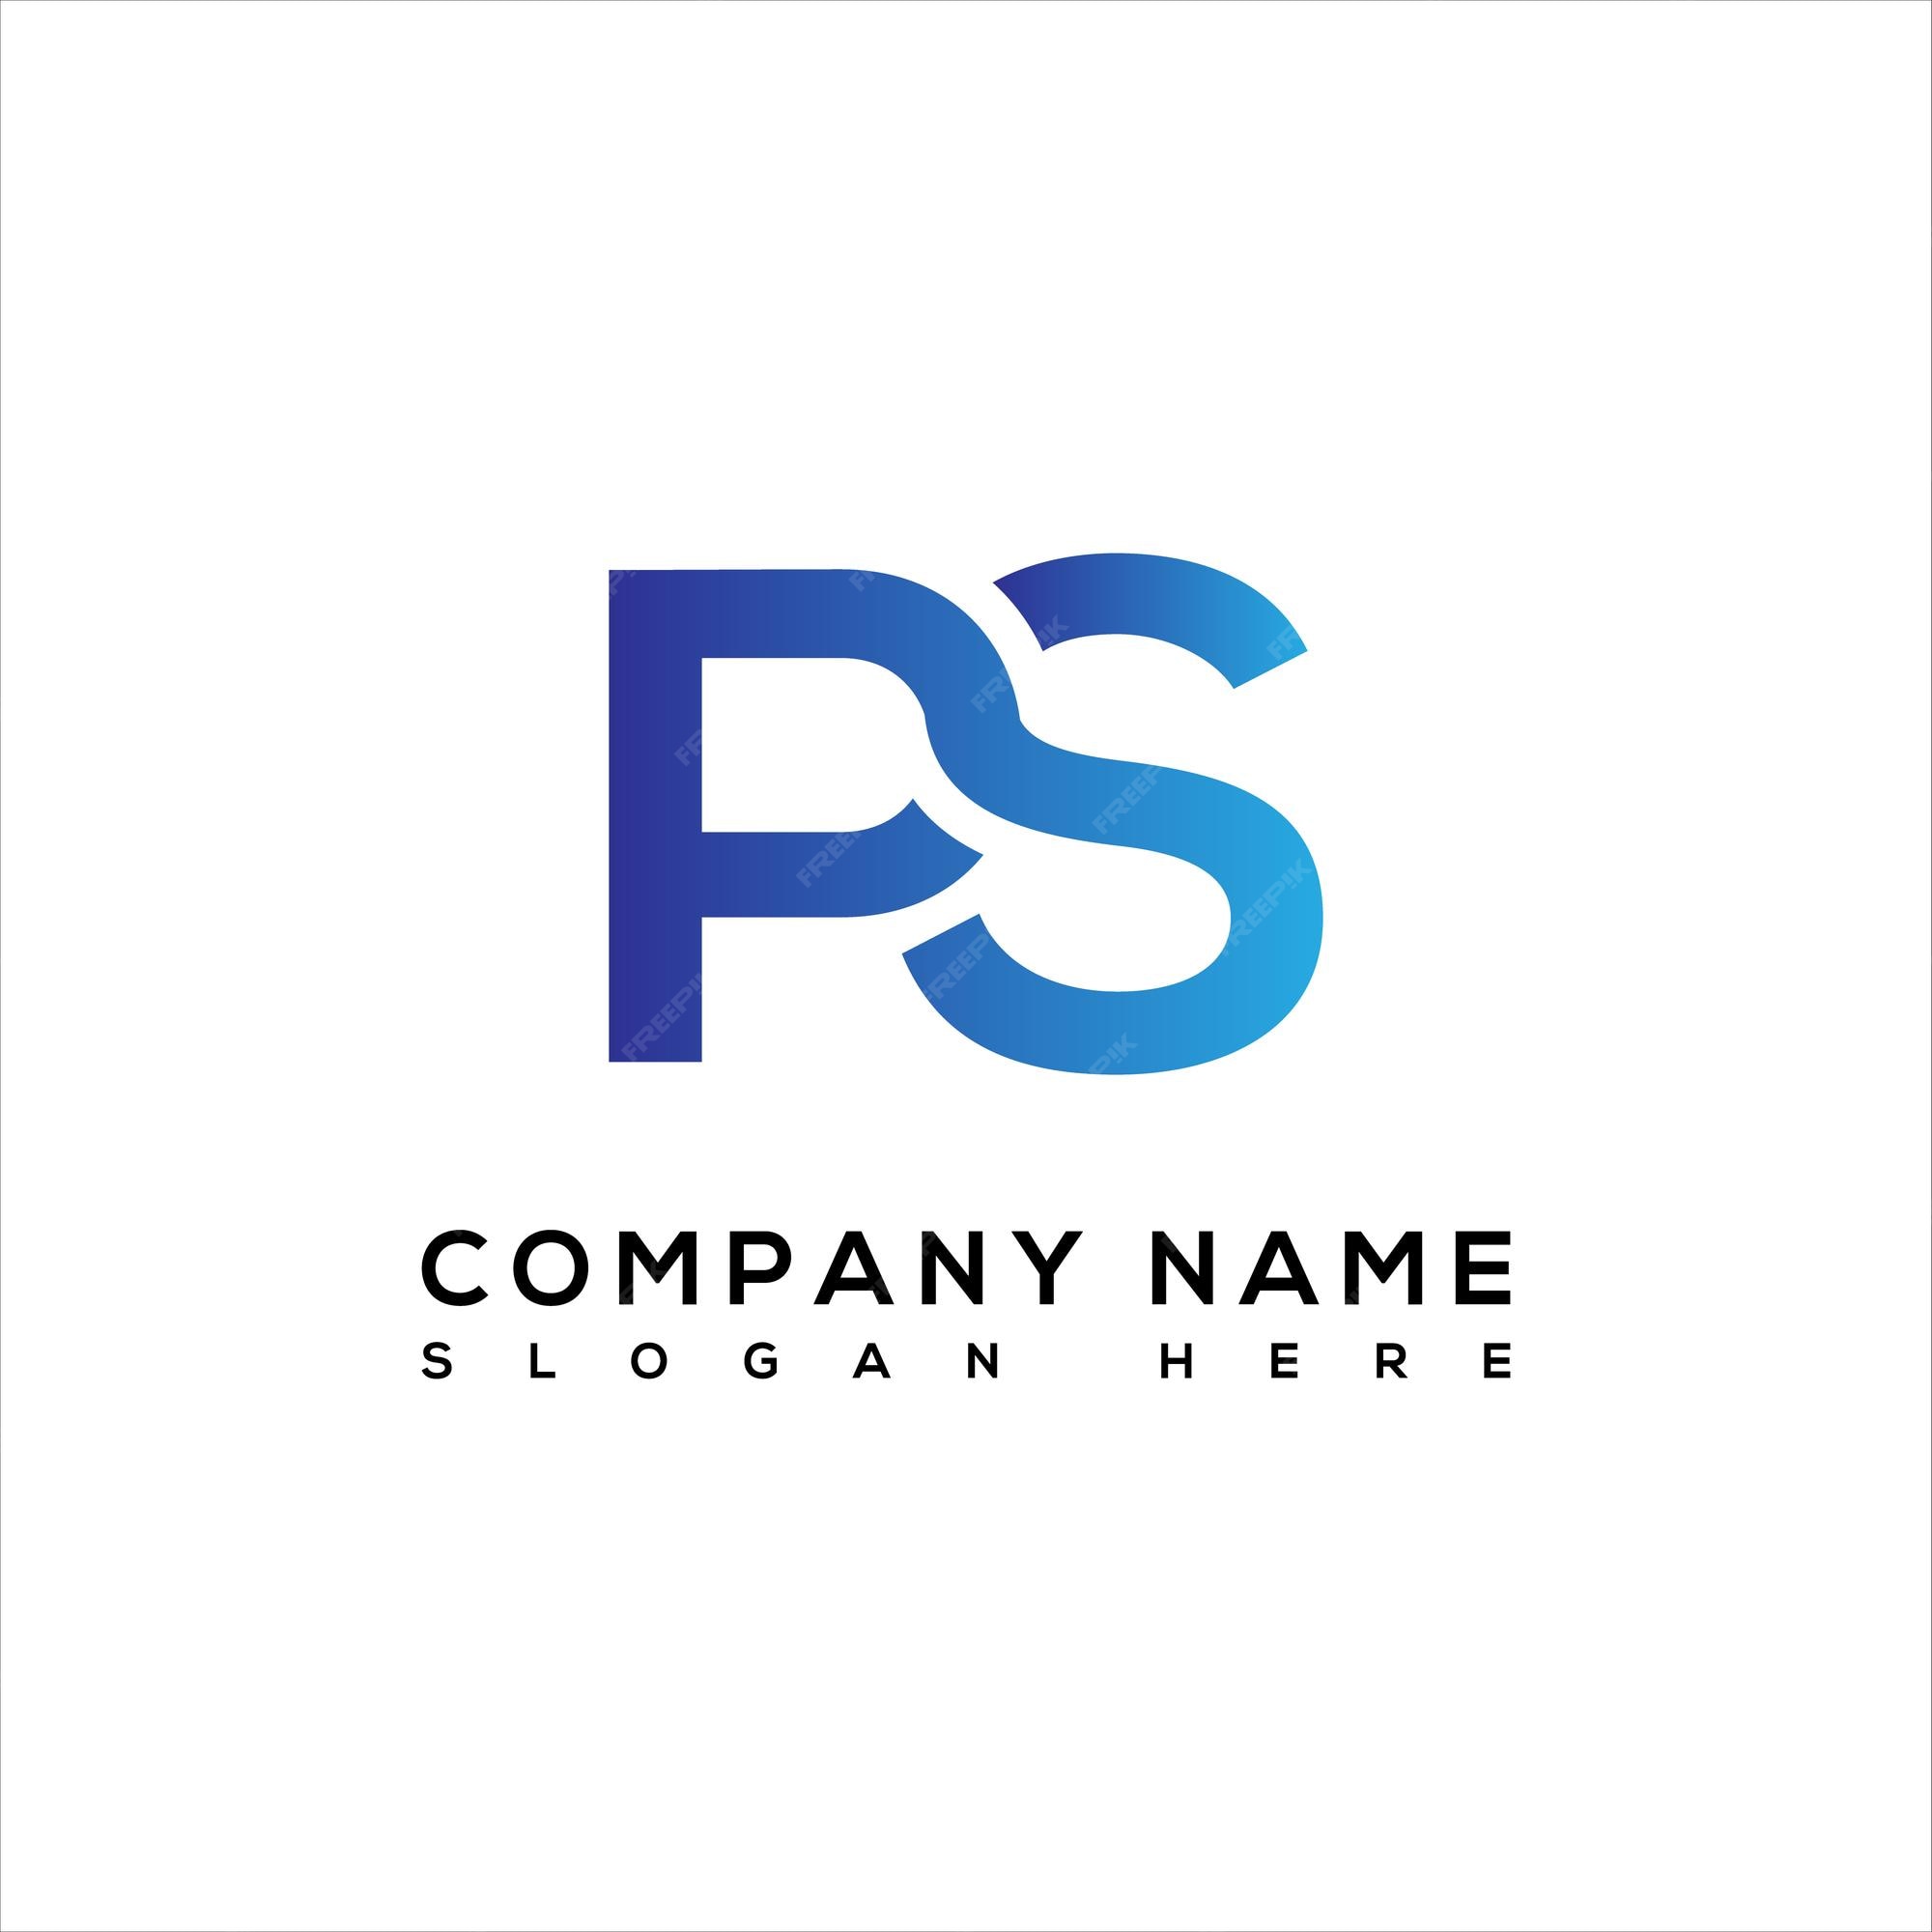 Premium Vector | Letter ps word mark logo design icon.